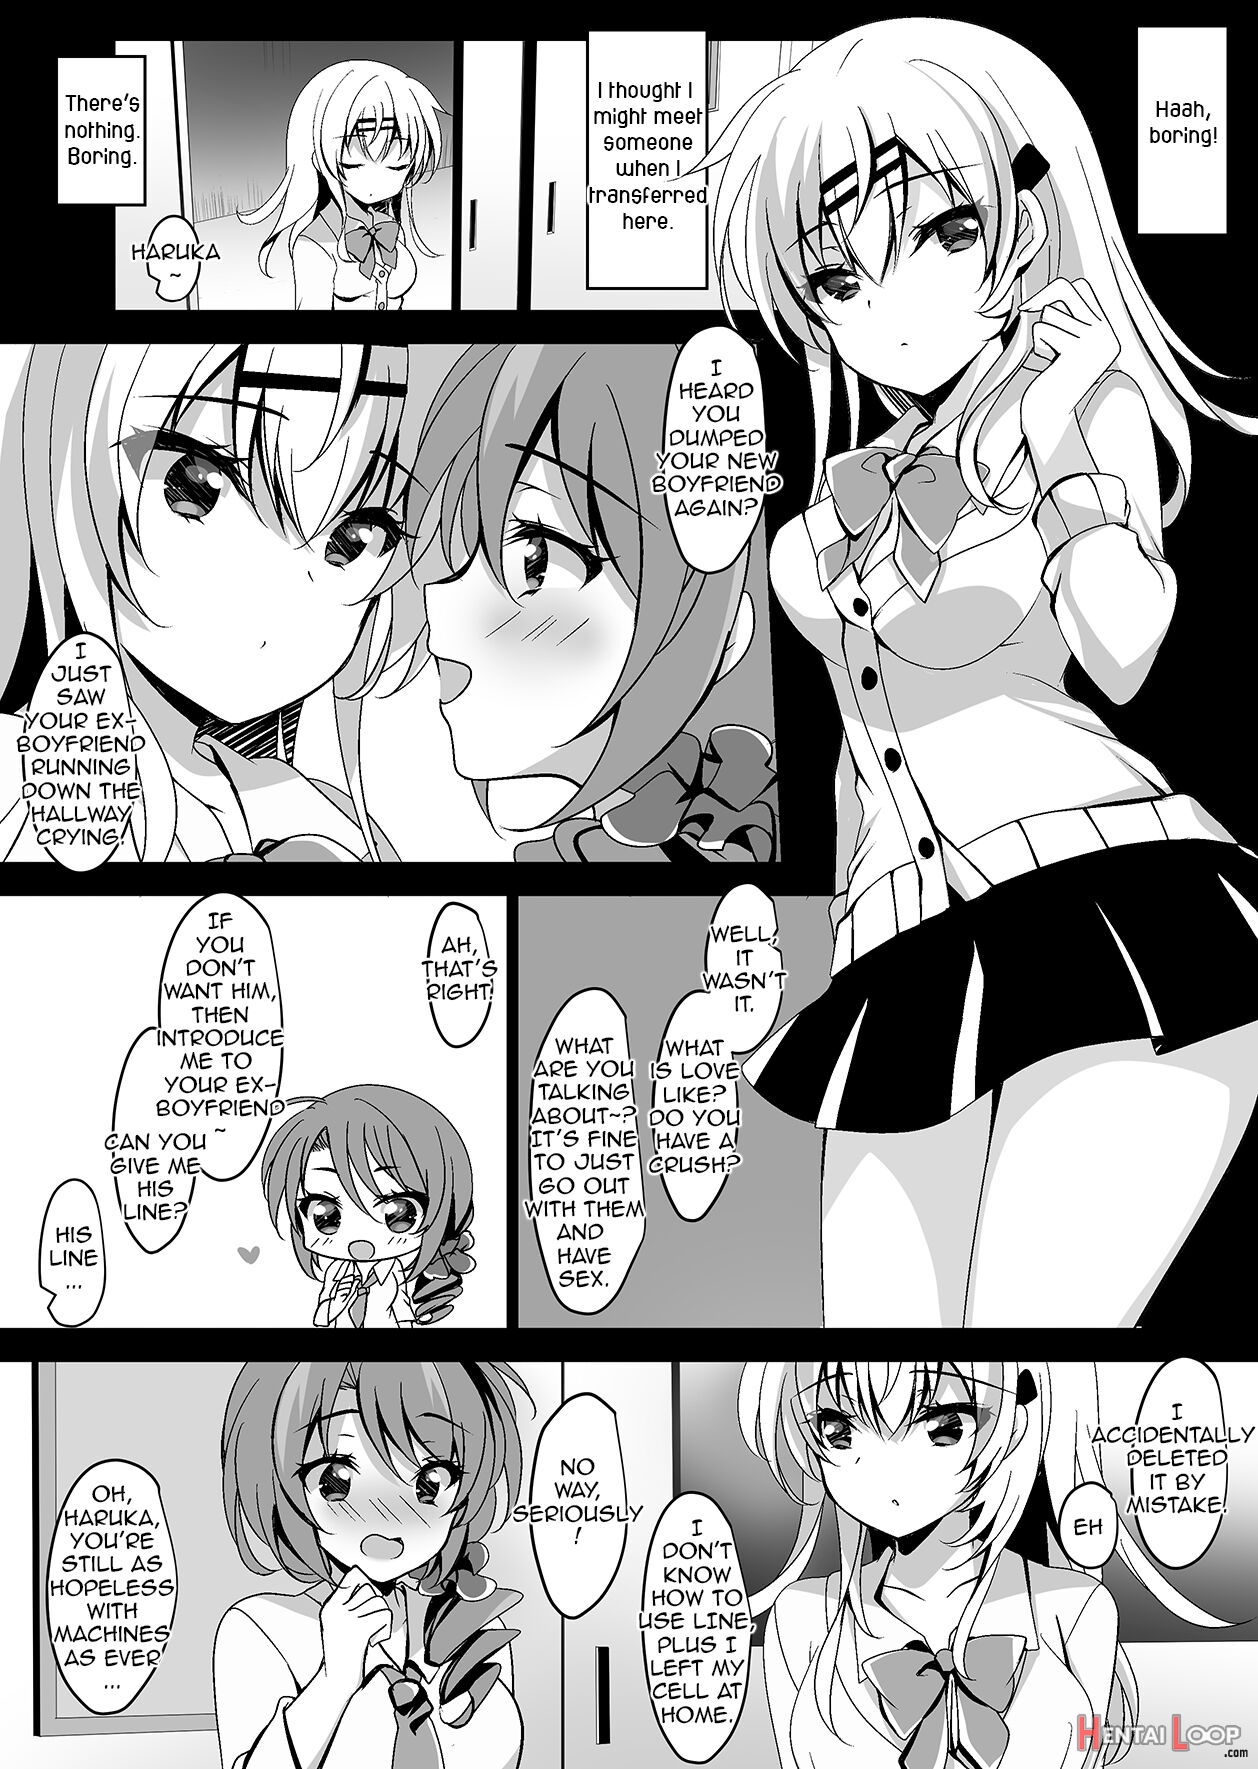 Hypnotic Girlfriend Haruka Maezawa 2 page 6